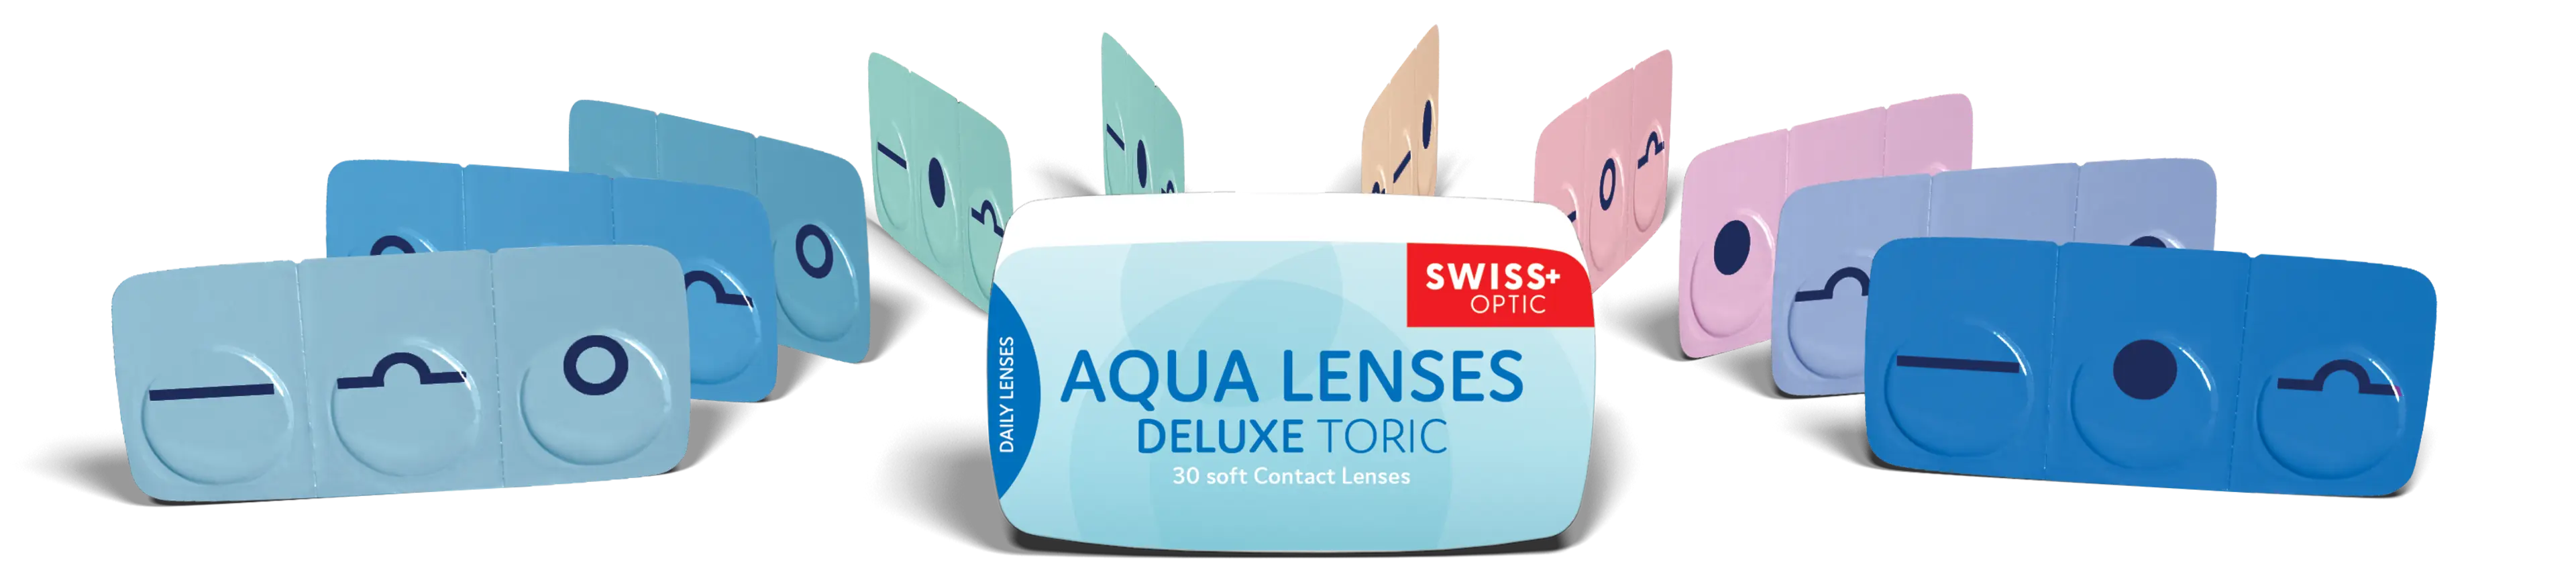 Swiss Optic Aqua Deluxe T 30 pack